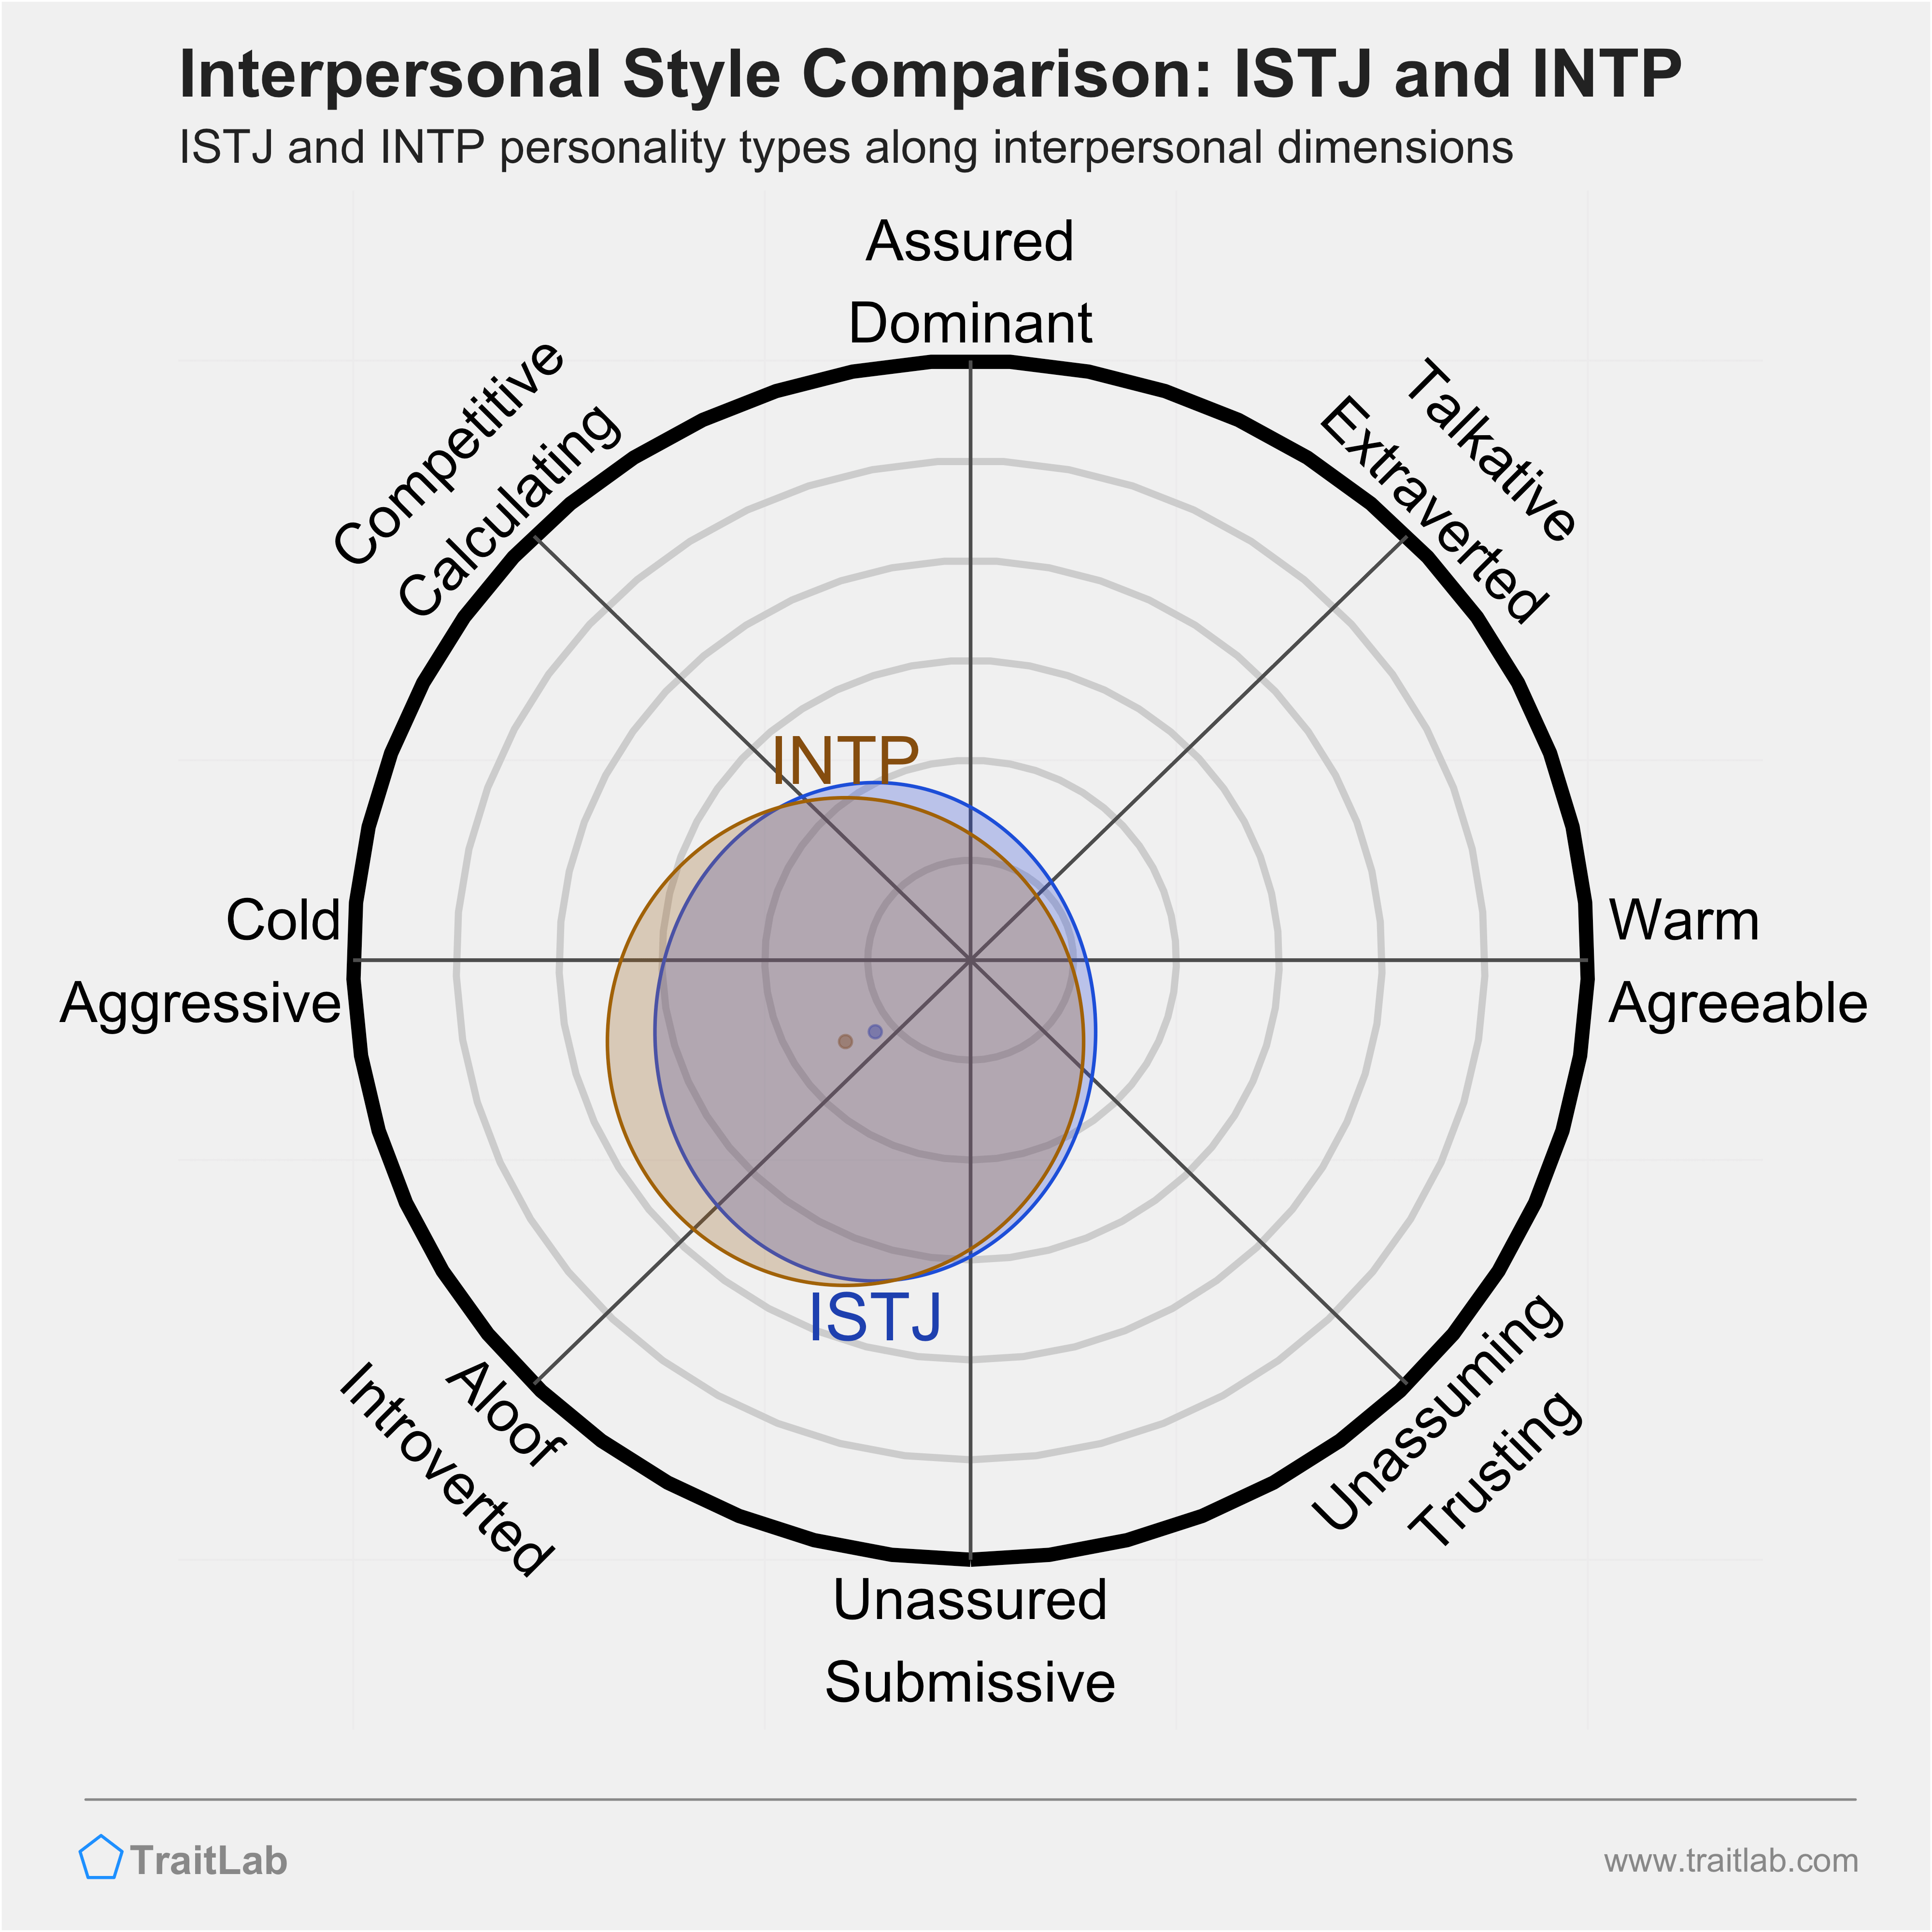 ISTJ and INTP comparison across interpersonal dimensions